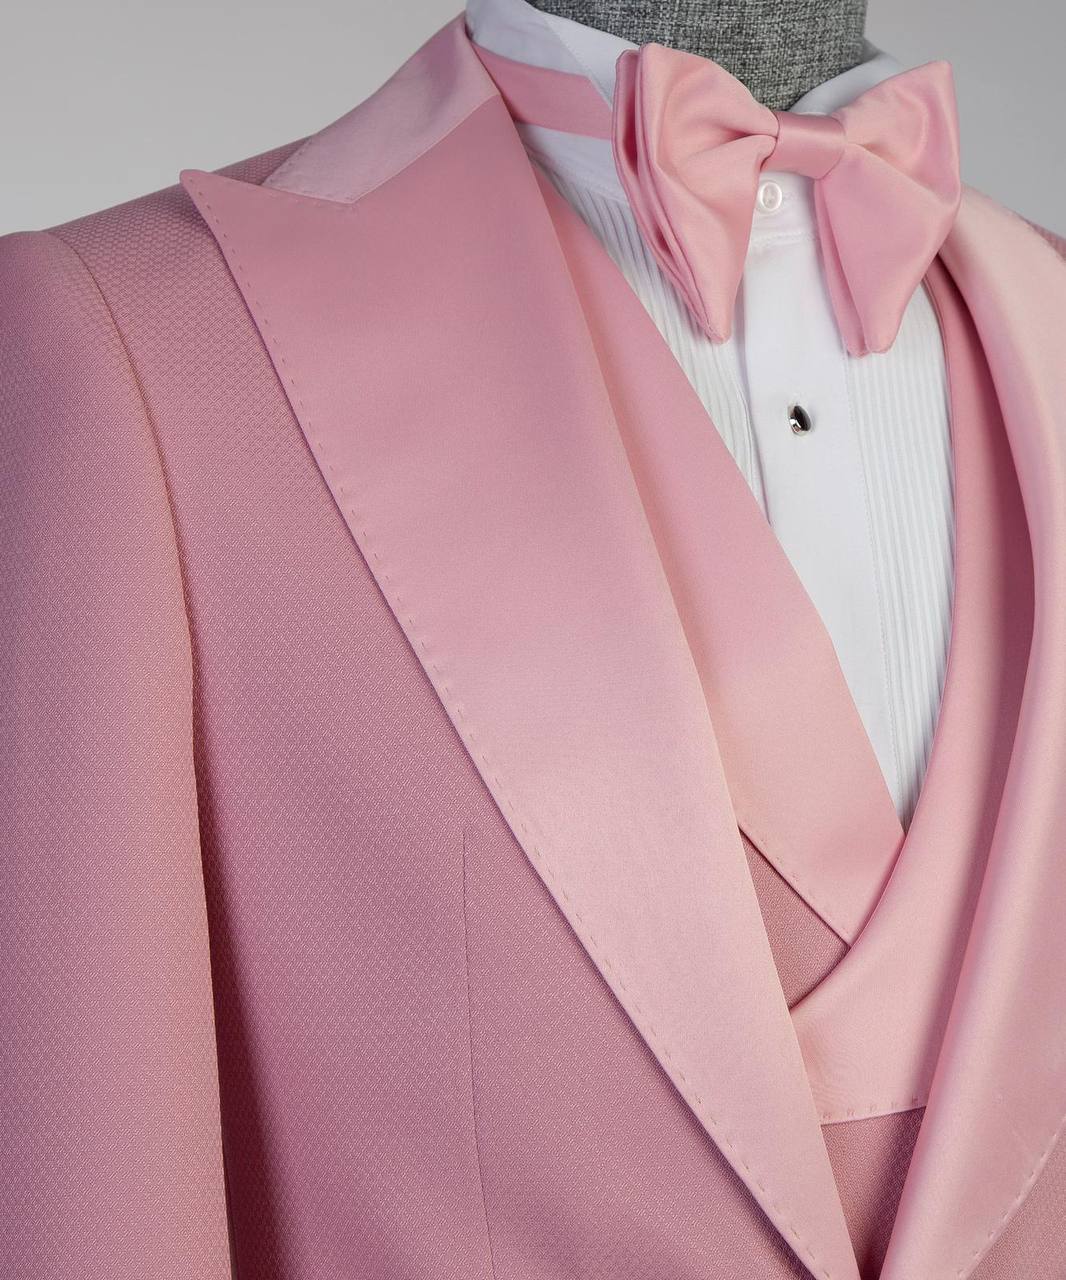 Men's Pink Tuxedo-Asymmetrical Satin Lapel